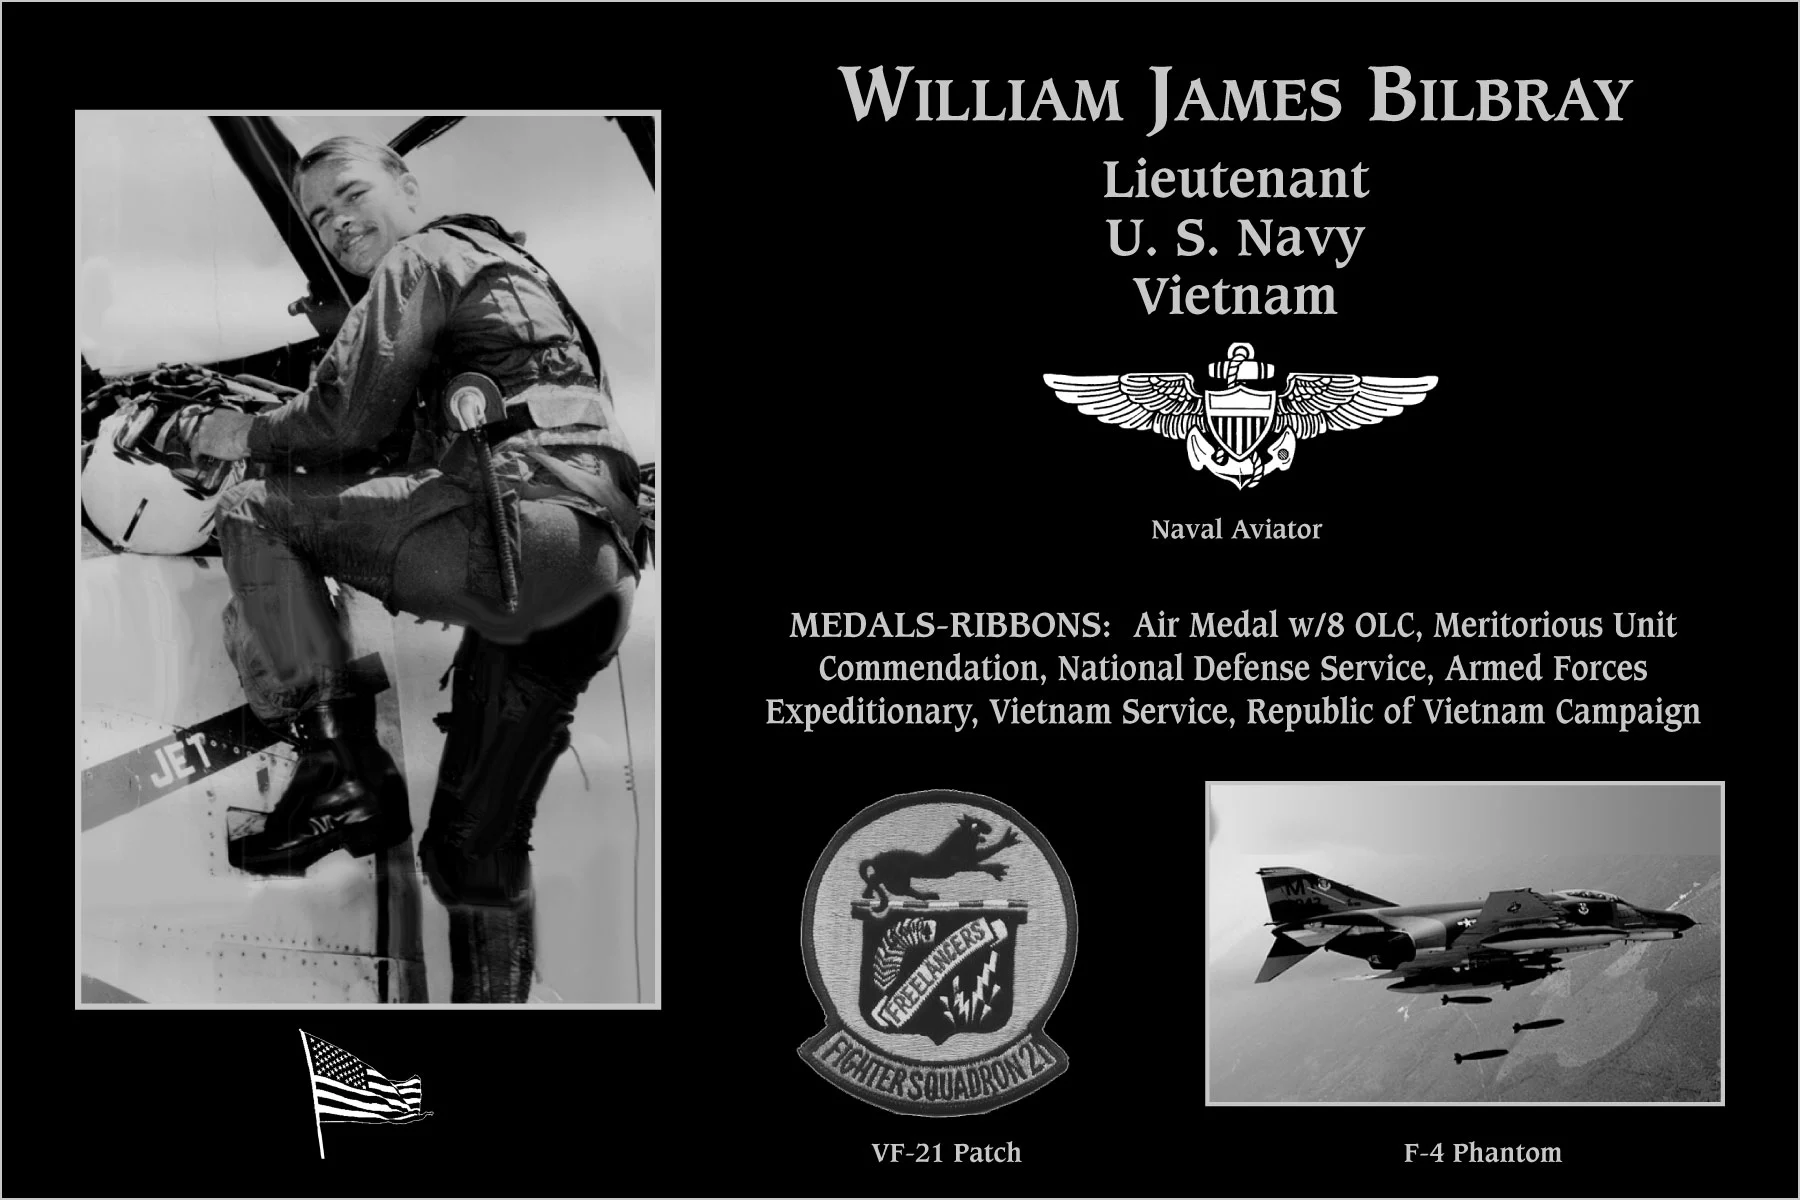 William James Bilbray